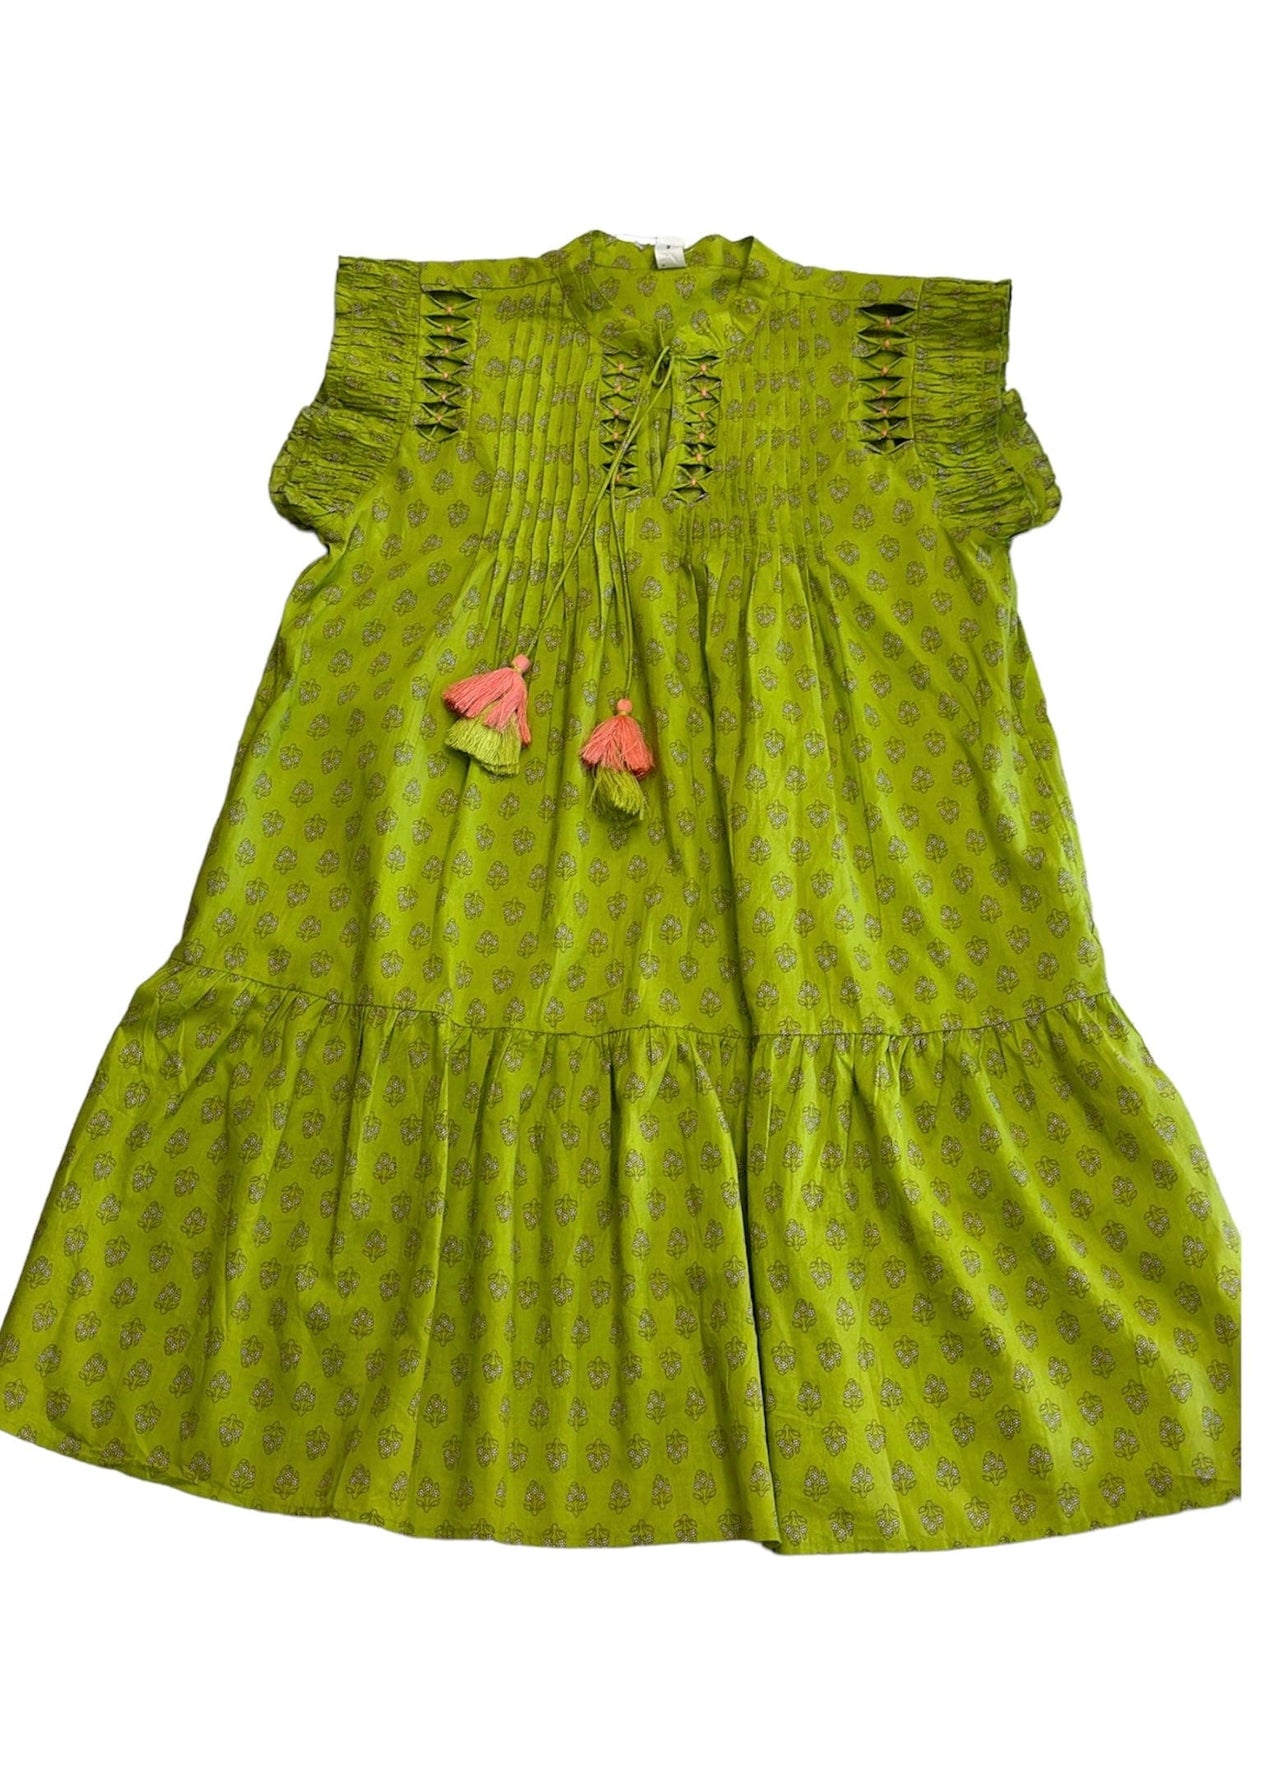 Lattice Trim Dress by Uncle Frank Ivy Jane Dress X-Small